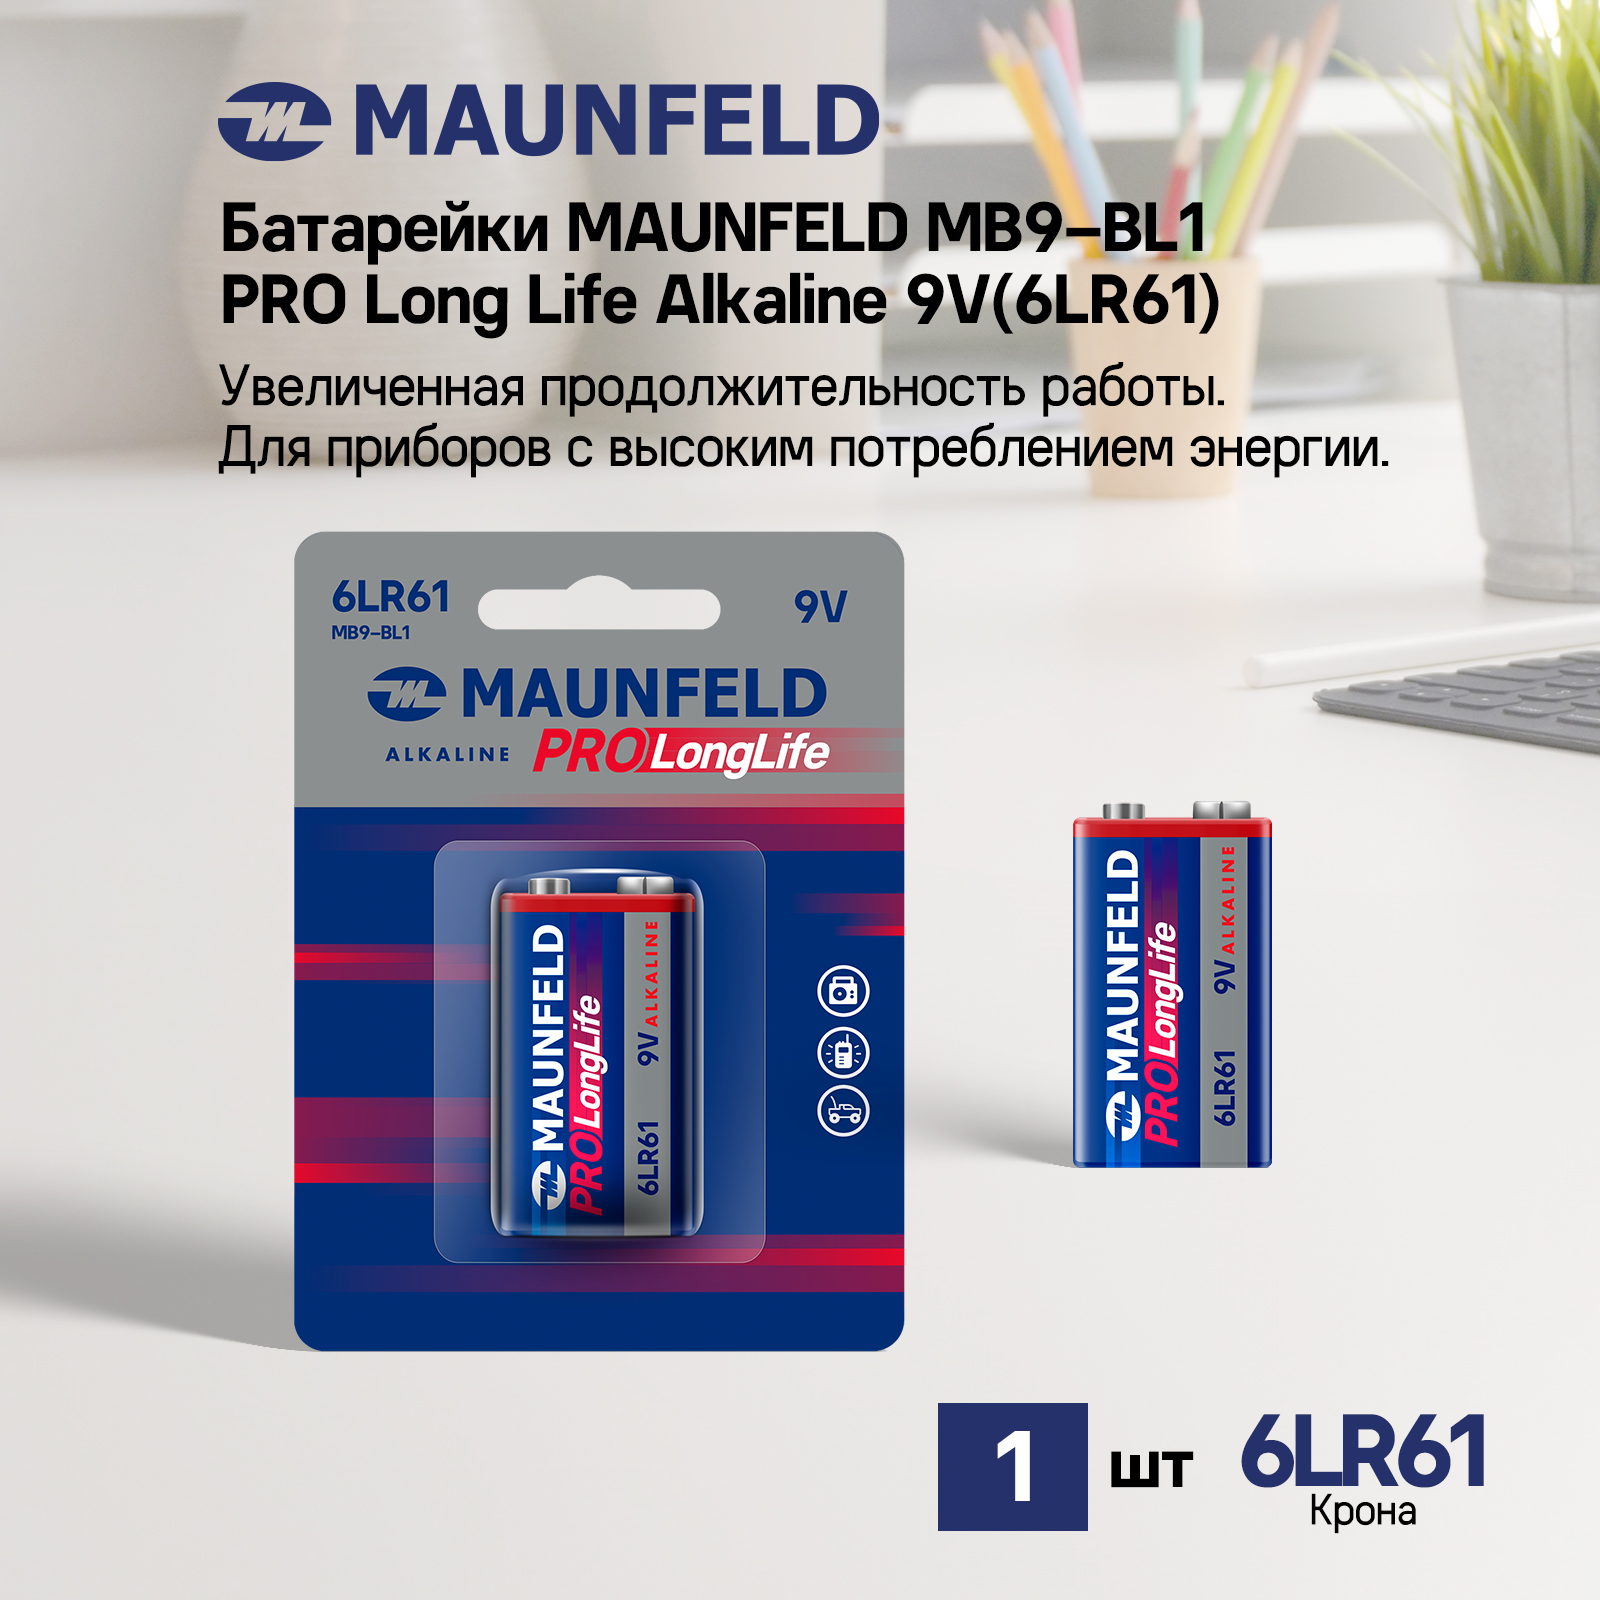 Батарейки MAUNFELD PRO Long Life Alkaline 9V(6LR61) MB9-BL1, блистер 1 шт. мясорубка maunfeld mmg 3000s